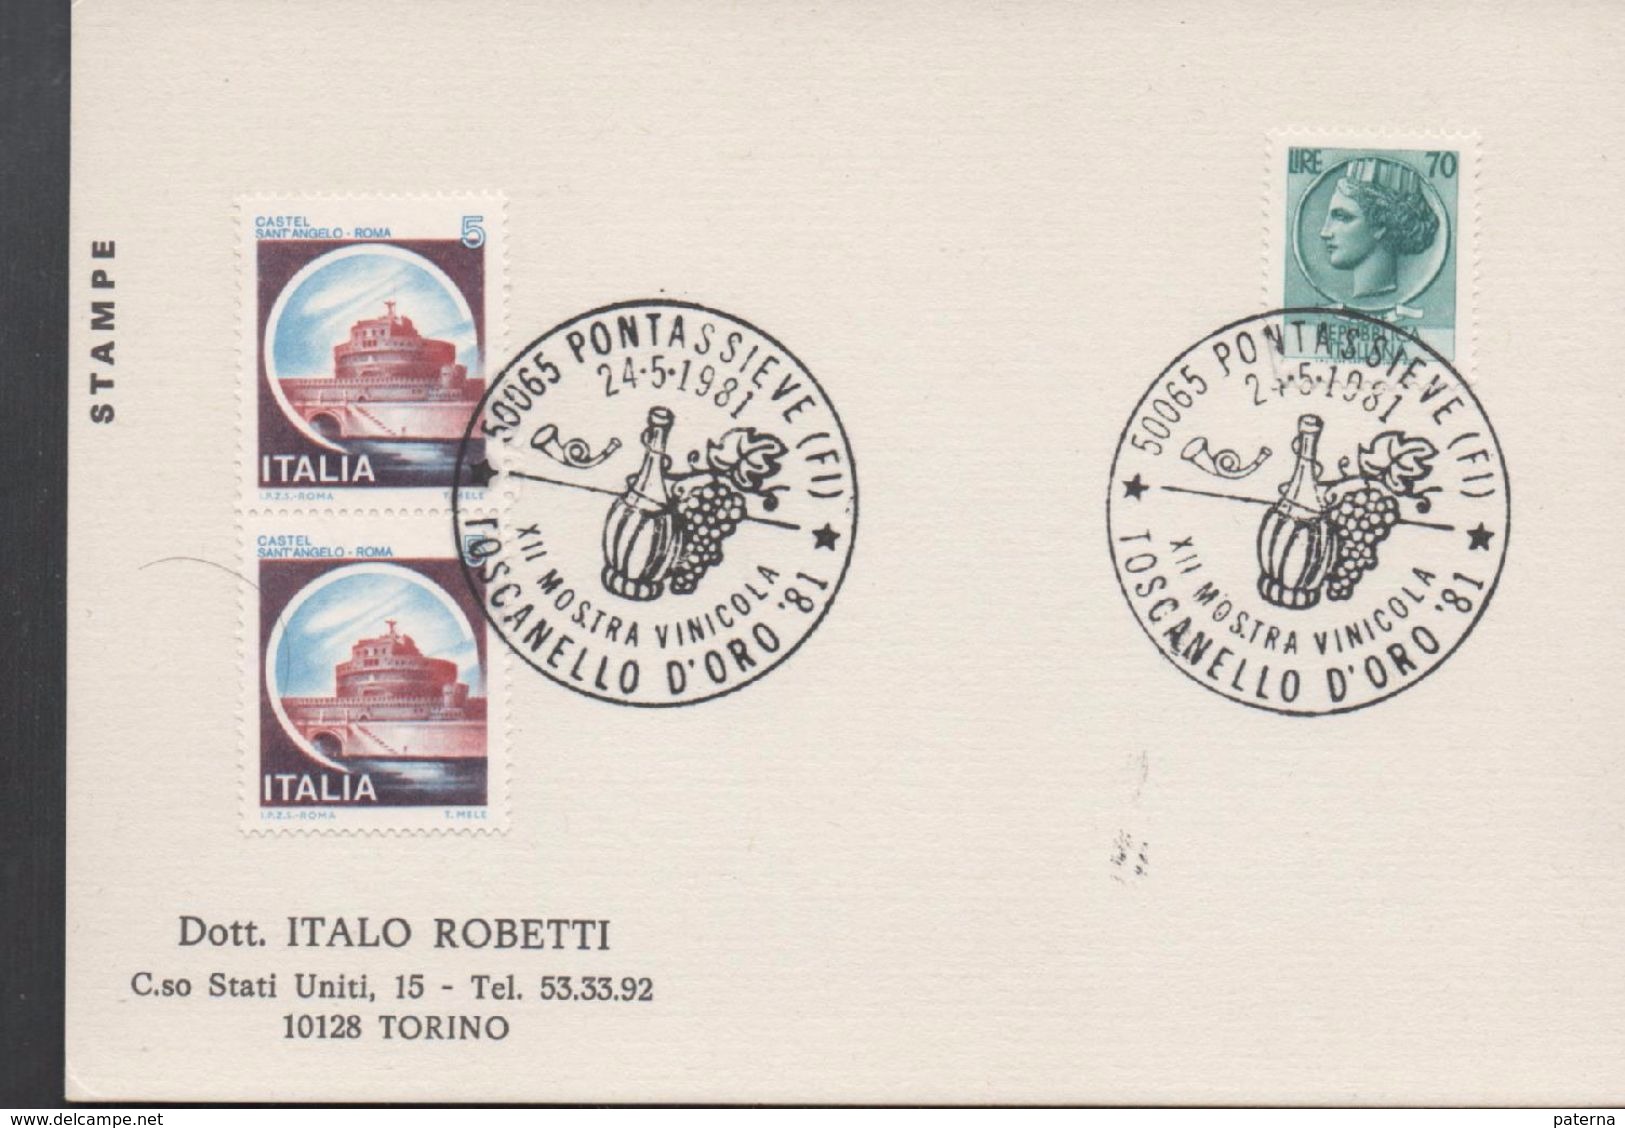 3175  Tarjeta Pontassieve 1981, Muestra Vinicola, Toscanello D'oro , Uva, Vino, - Wein & Alkohol